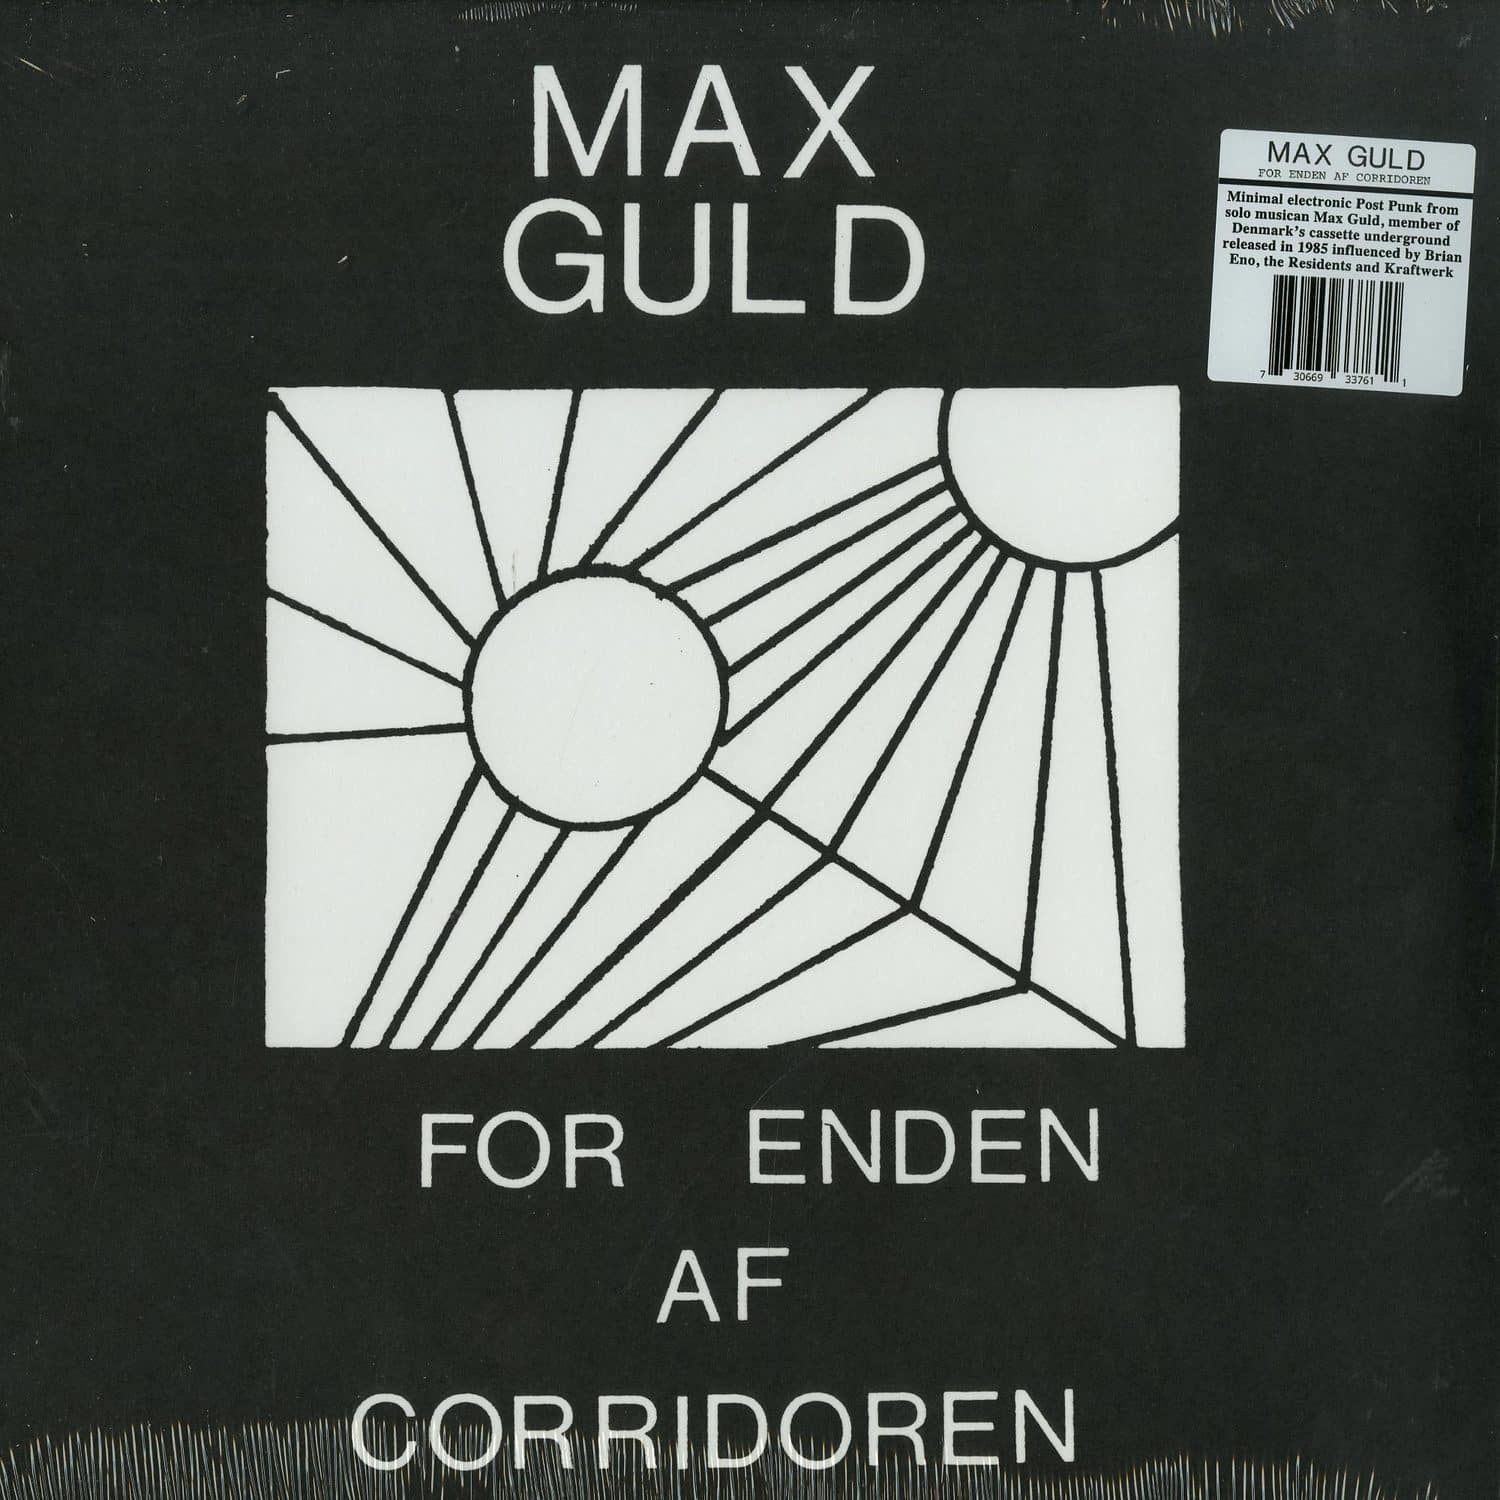 Max Guld - FOR ENDEN AF COORIDOREN 